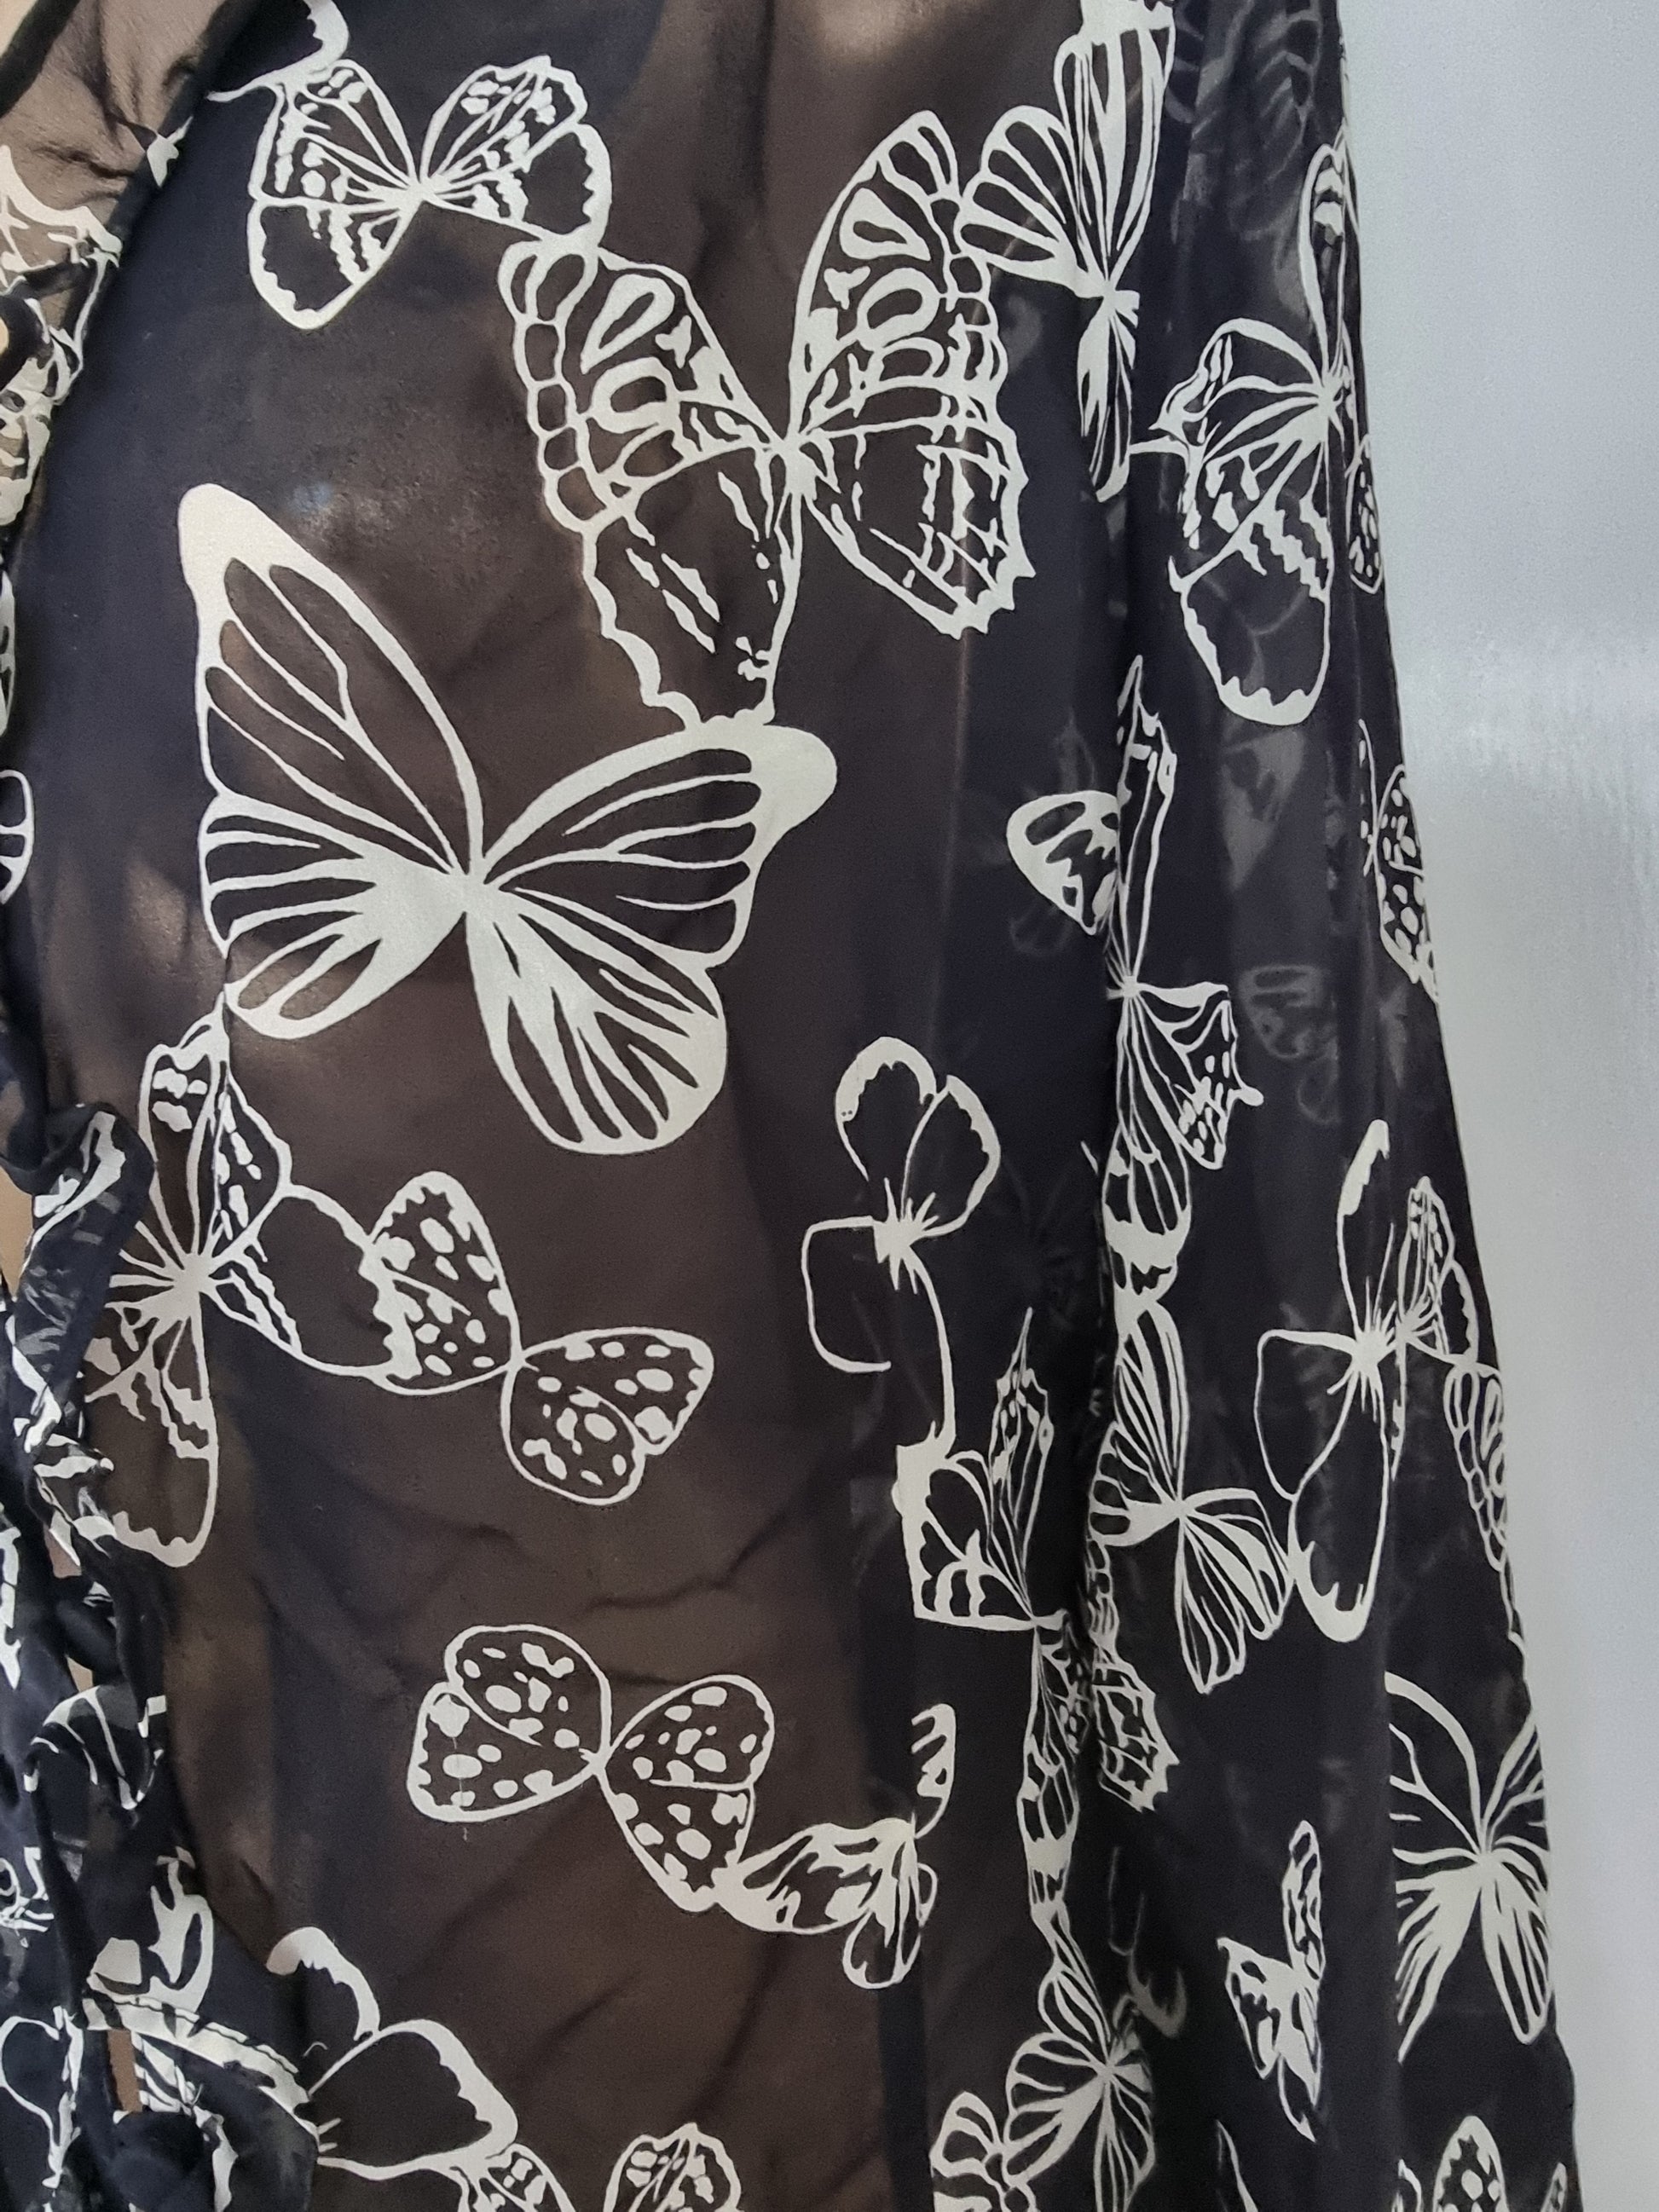 Caroline Charles Vintage Black & White Butterfly Ruffle Silk Blouse UK 16 US 12 EU 44 Timeless Fashions